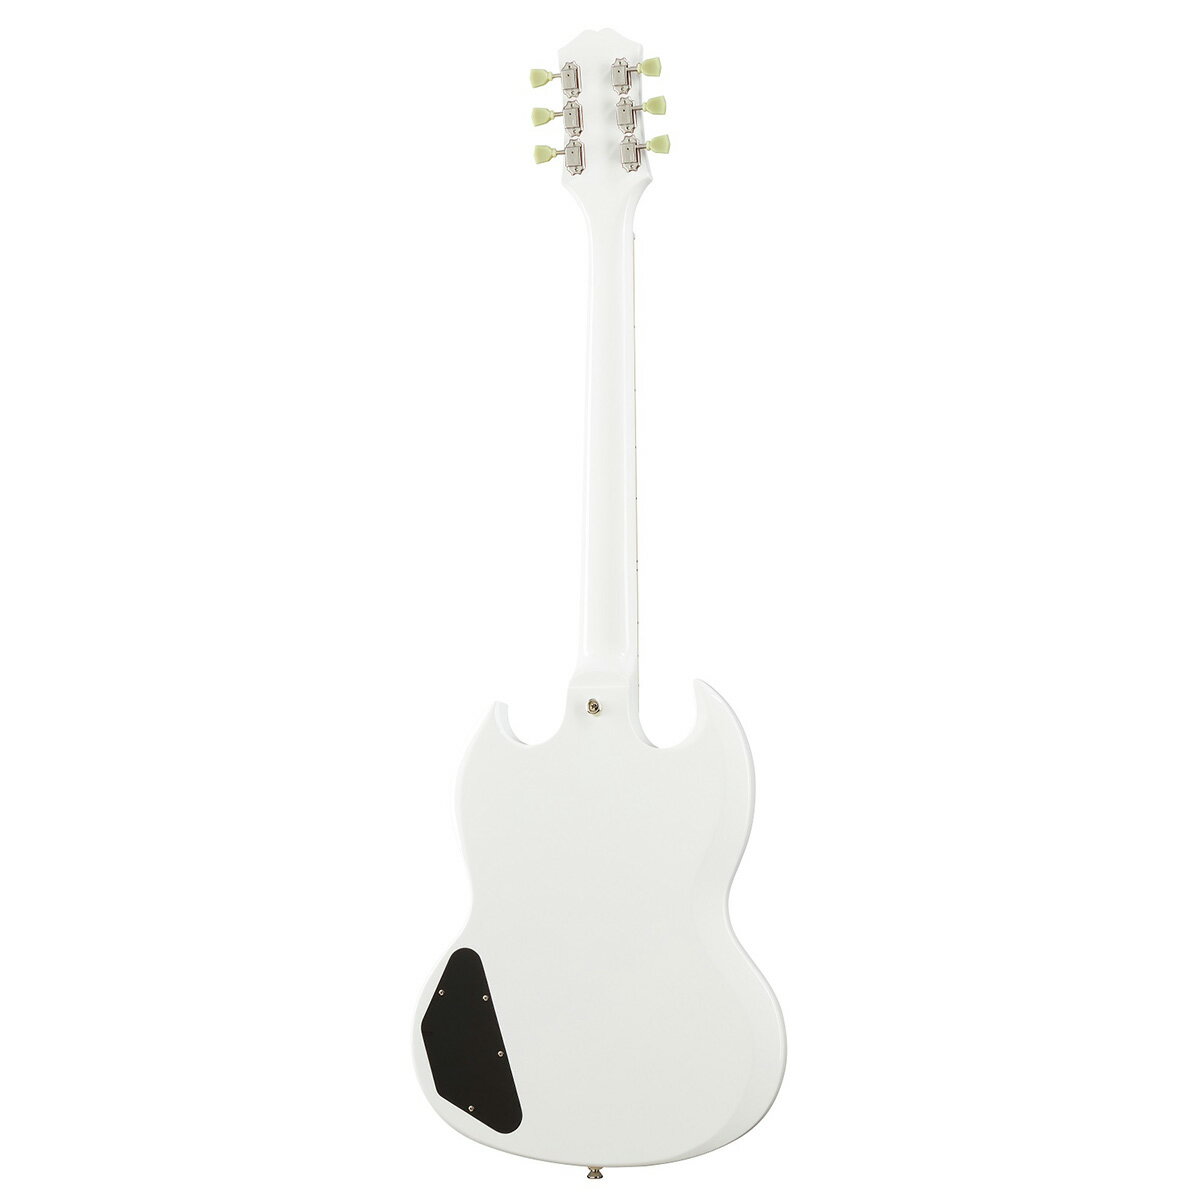 Epiphone SG Standard Lefty Alpine White エレキギター初心者14点セット【ミニアンプ付き】 左利き用 レフティ 【エピフォン】